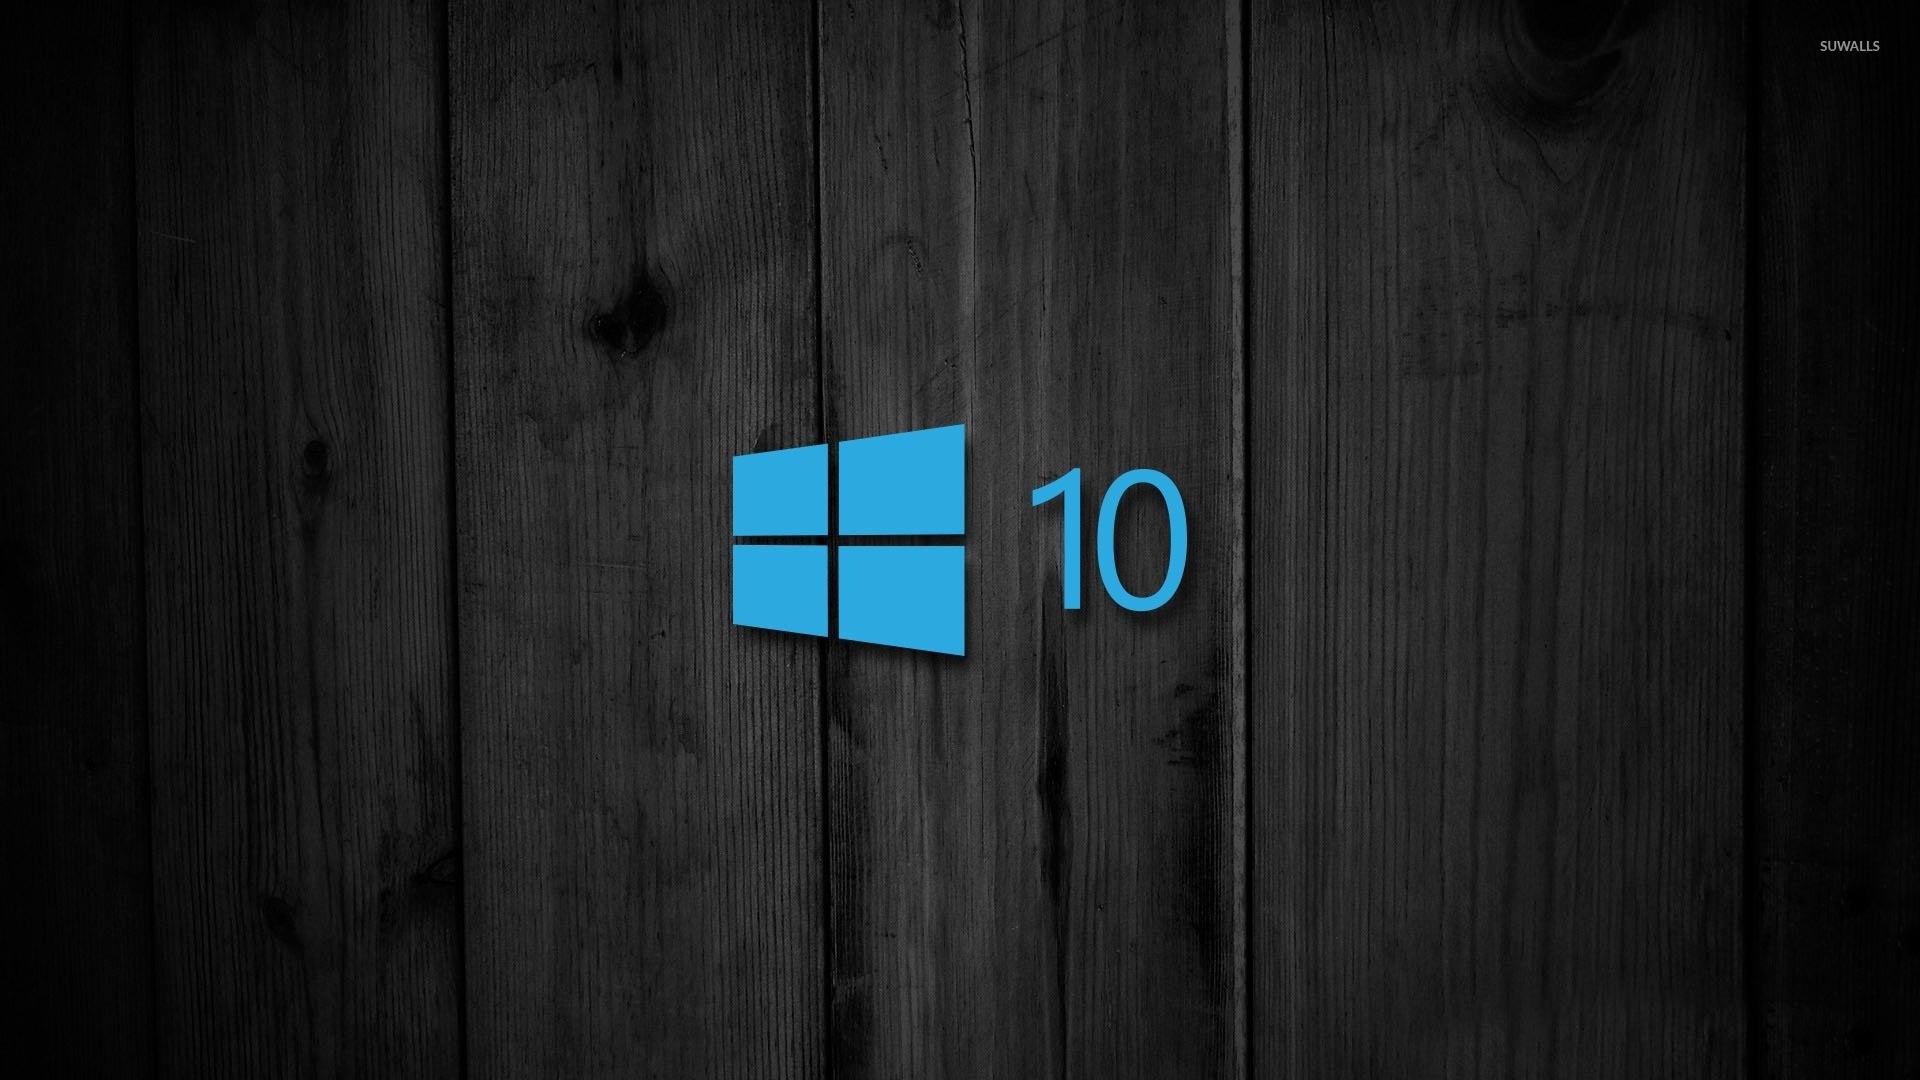 Windows 10 on black wooden panels 3 wallpaper jpg